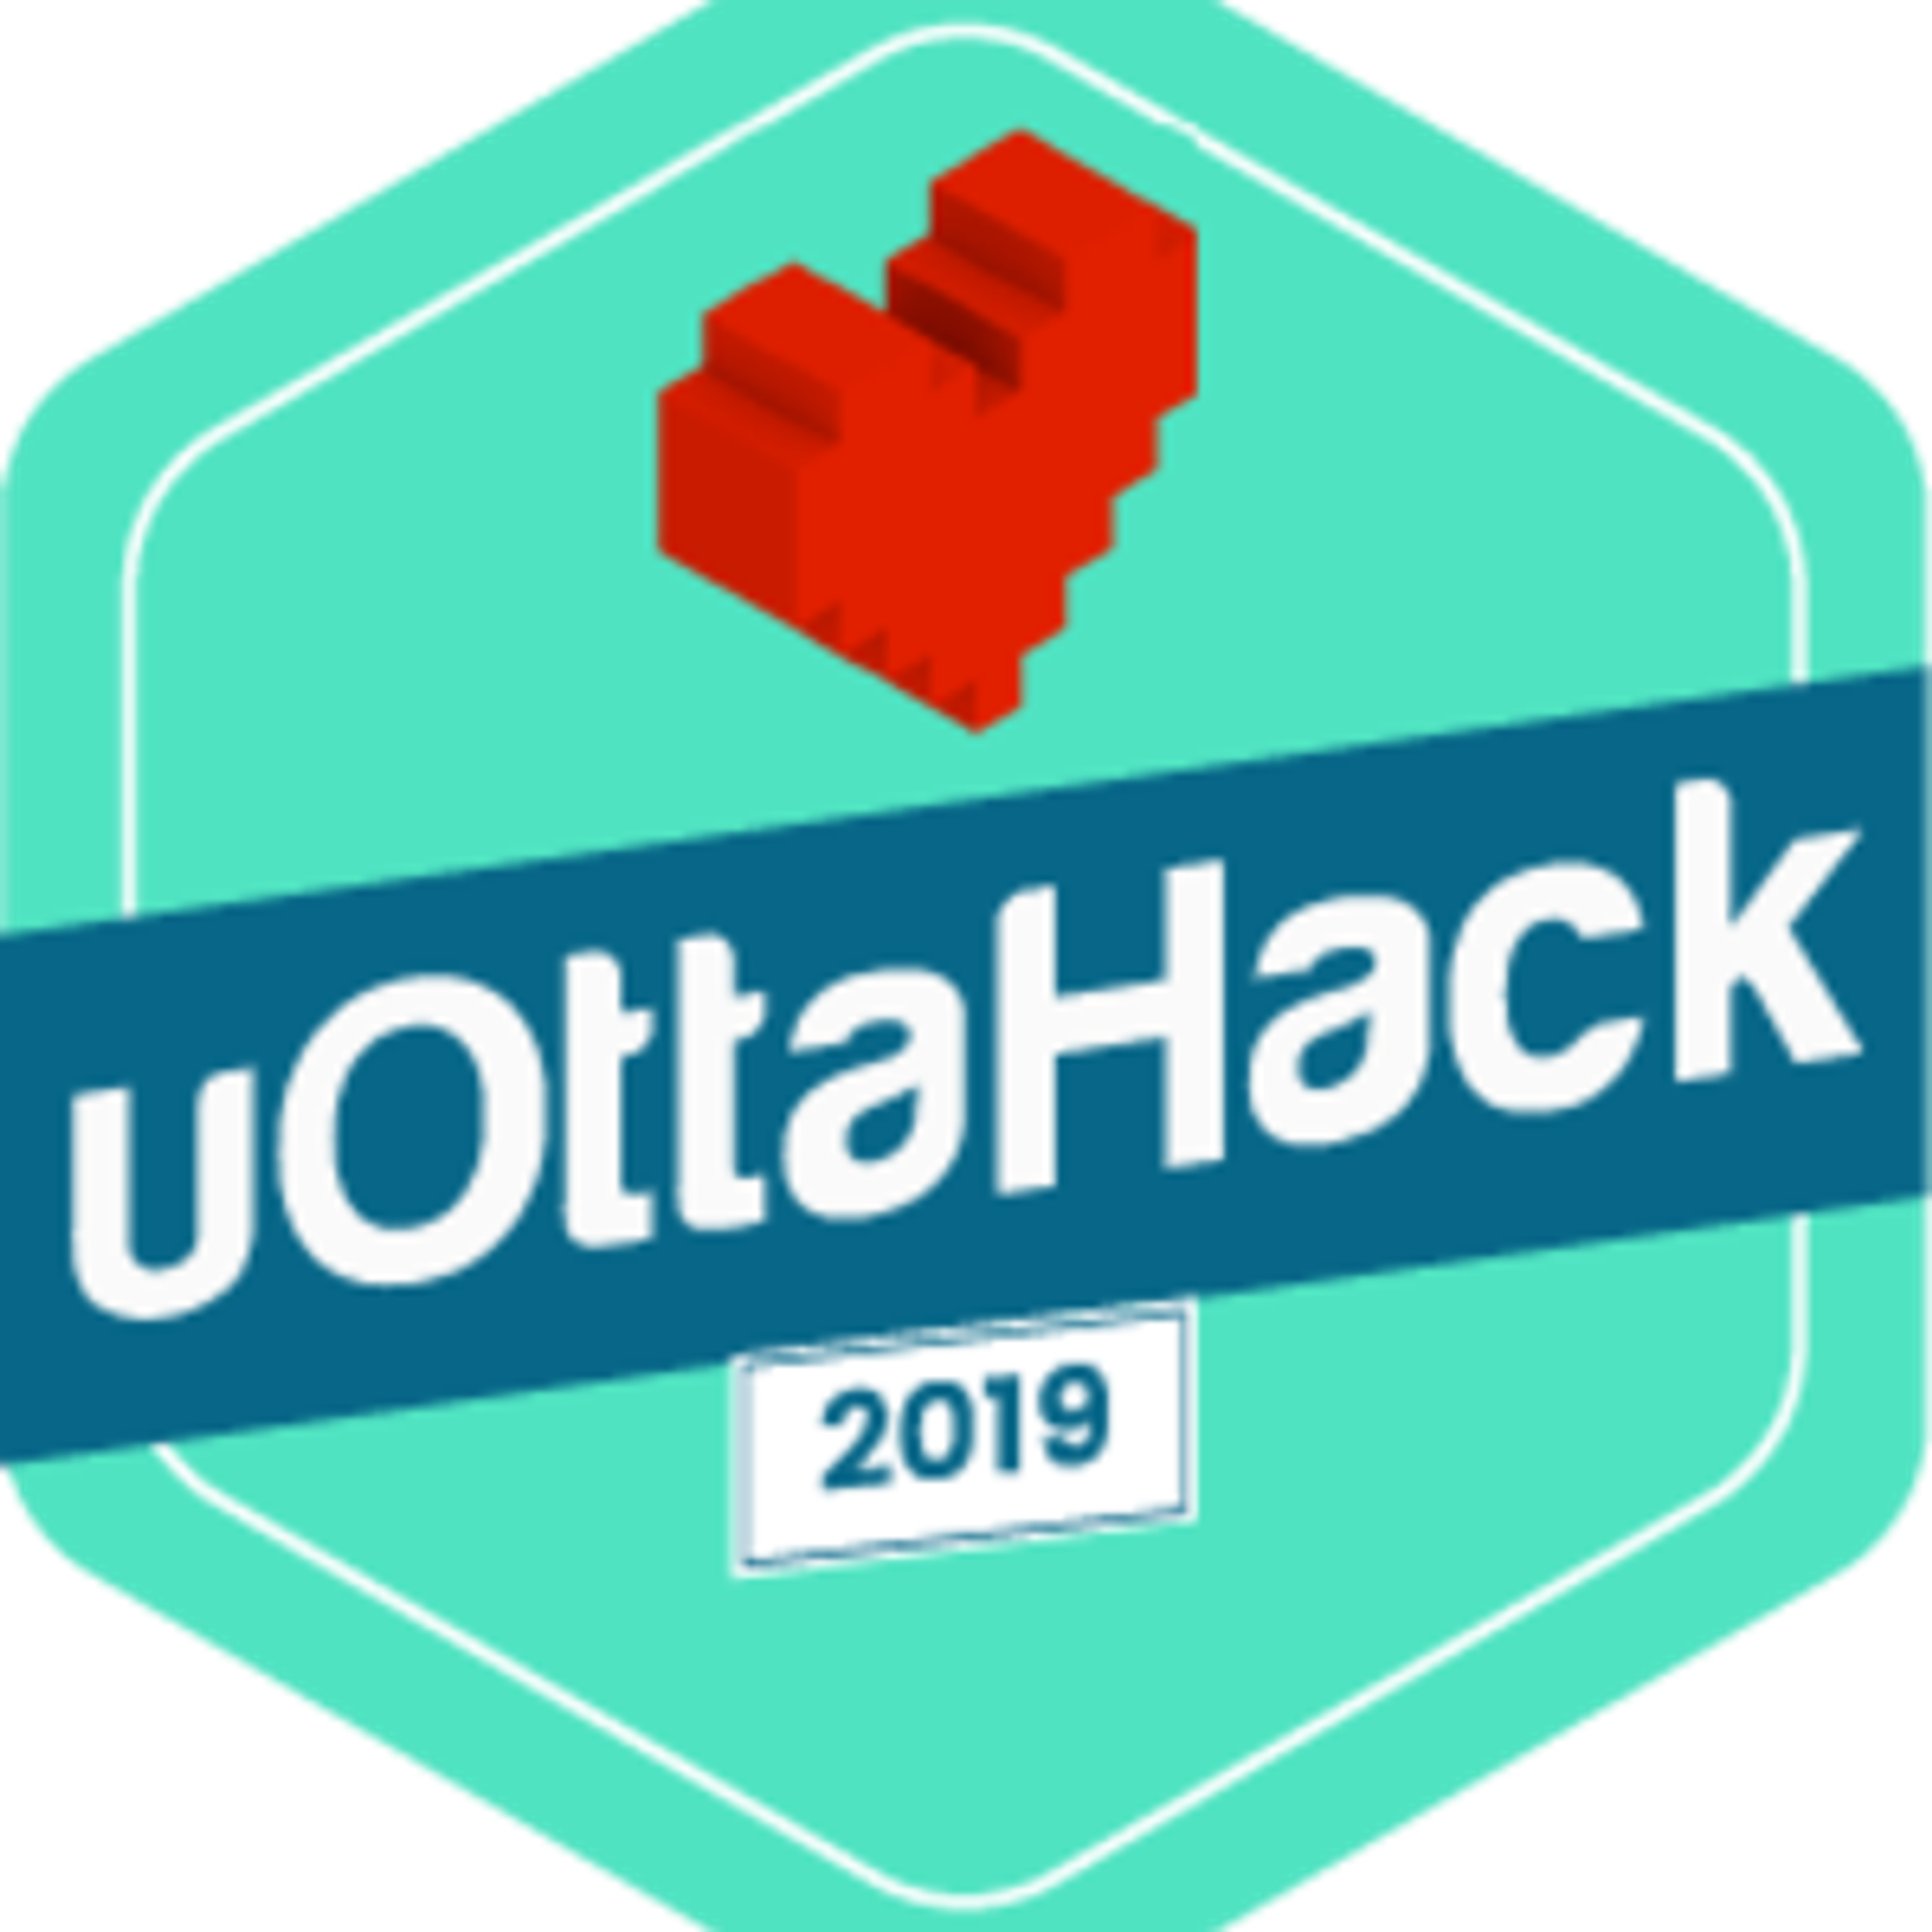 uOttaHack 2019